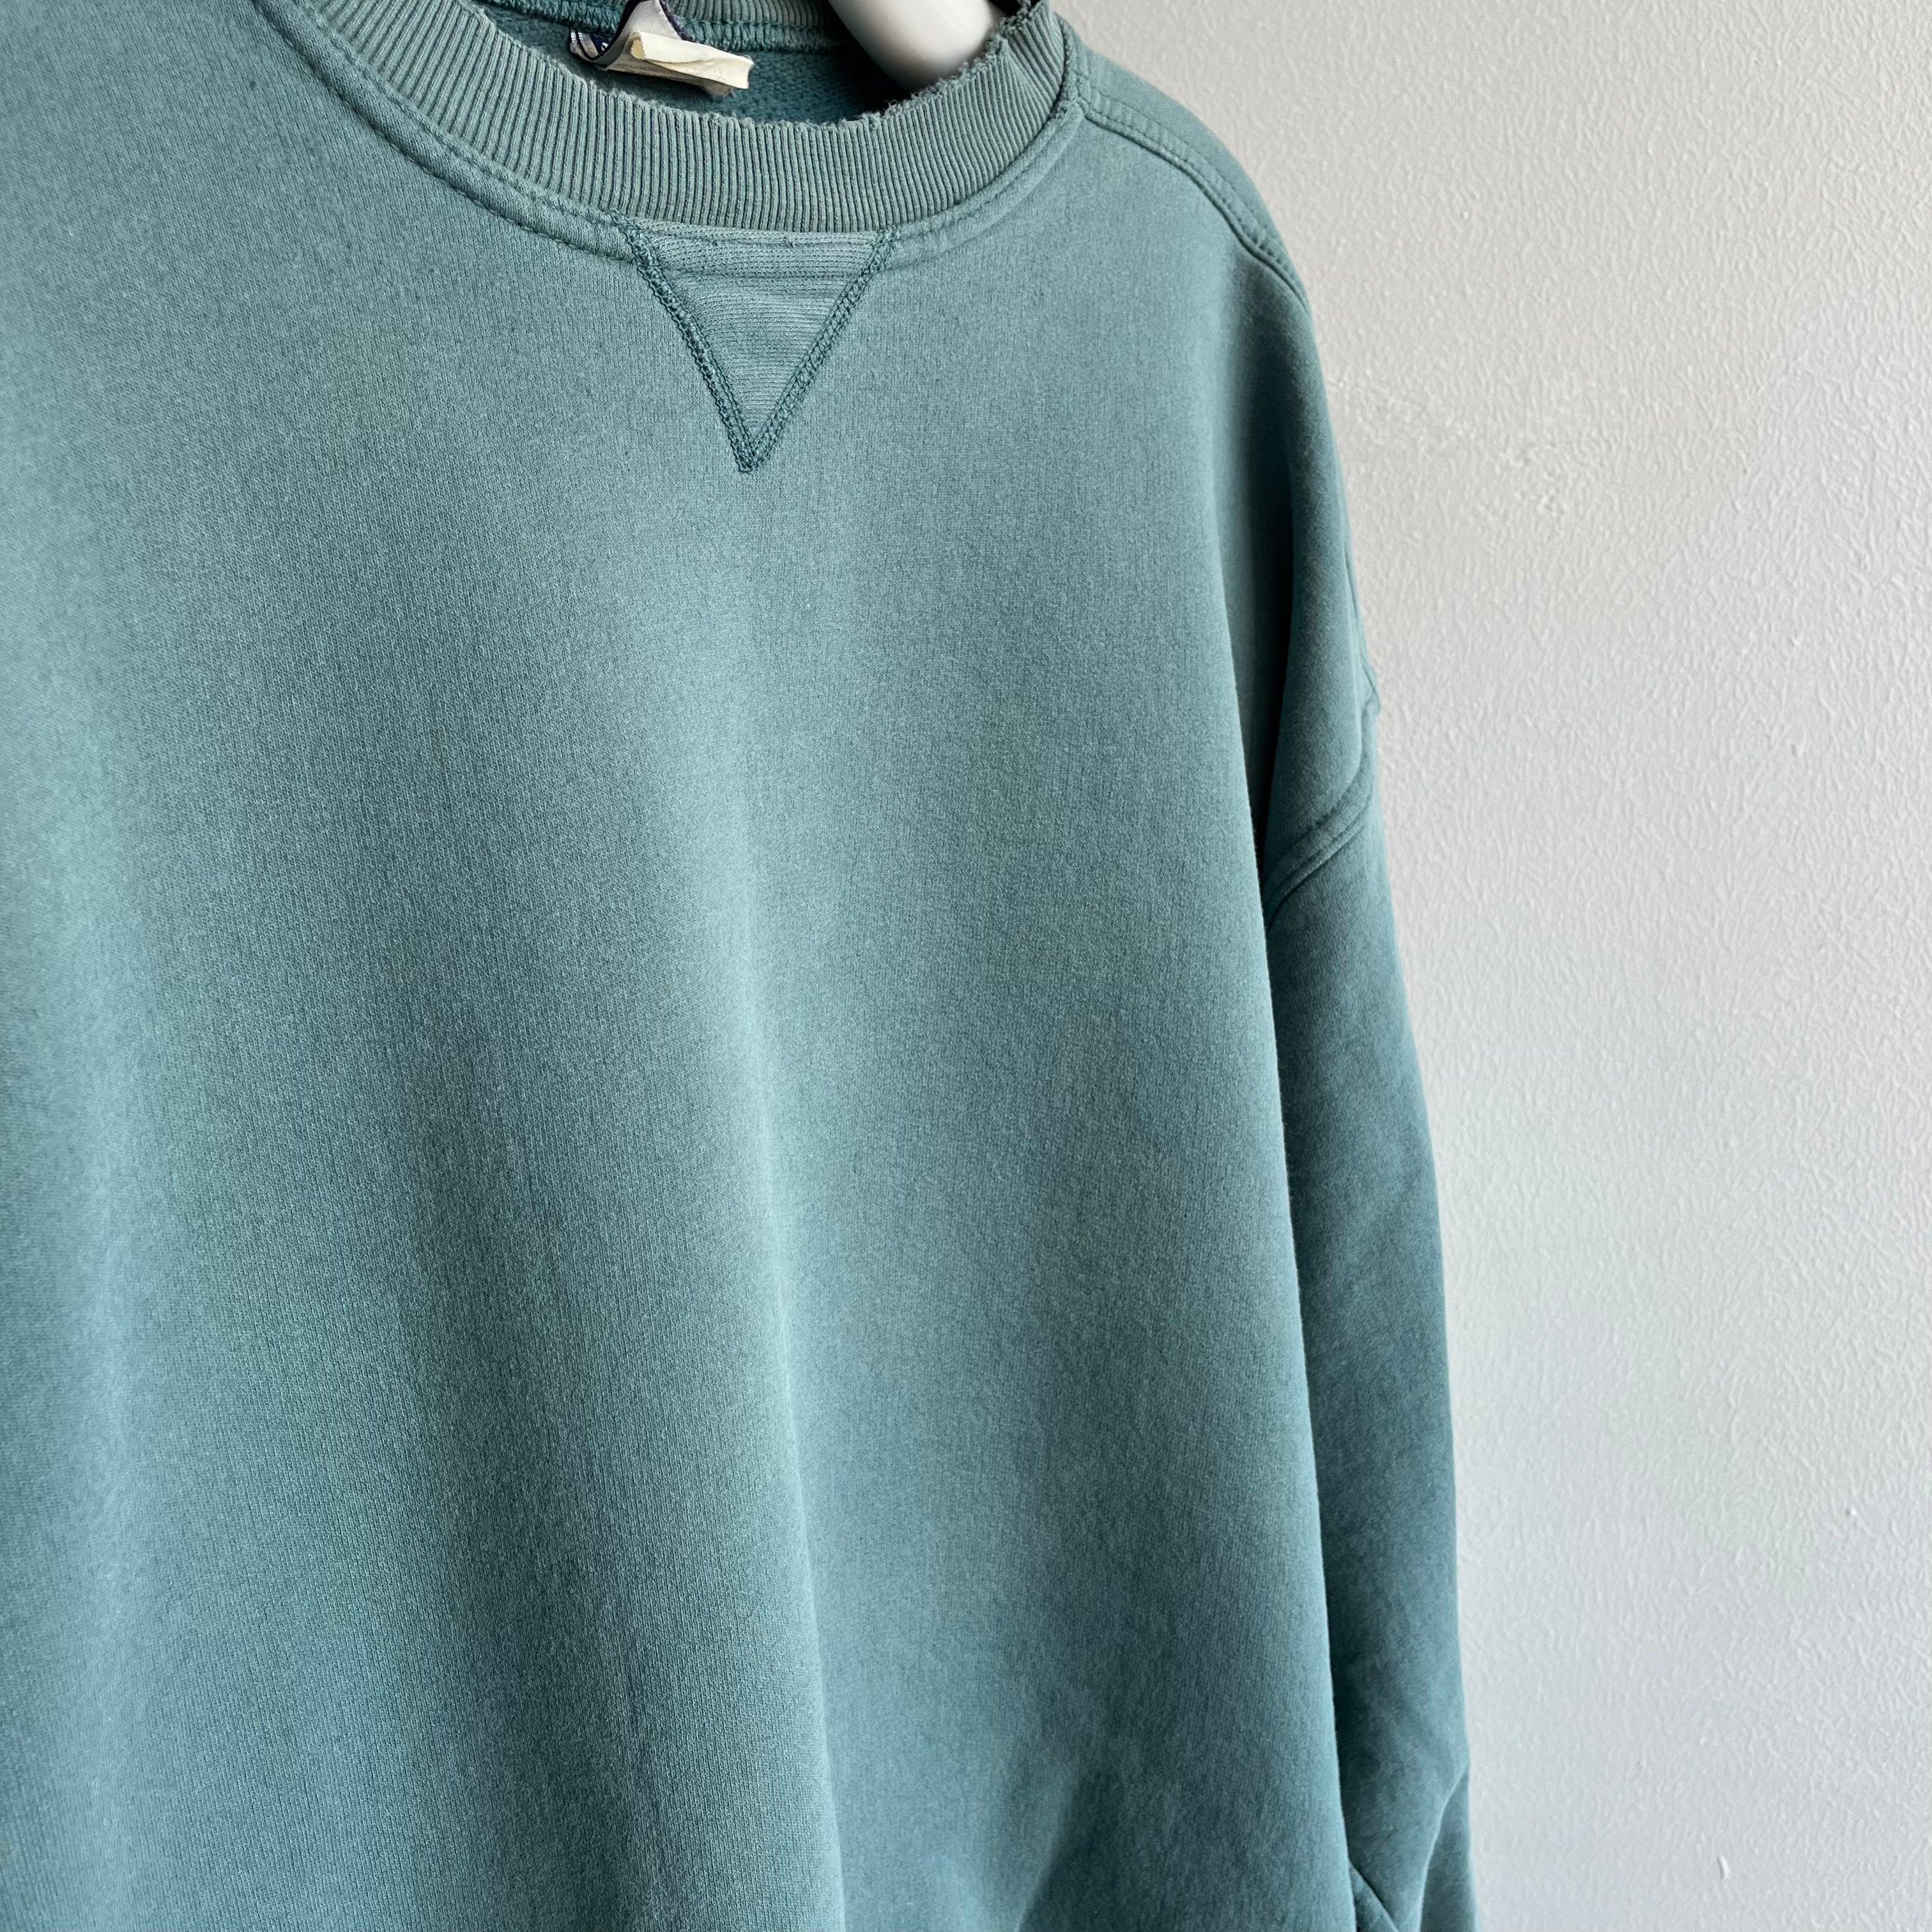 1990/2000s Jade Green Nicely Tattered Collar Sweatshirt